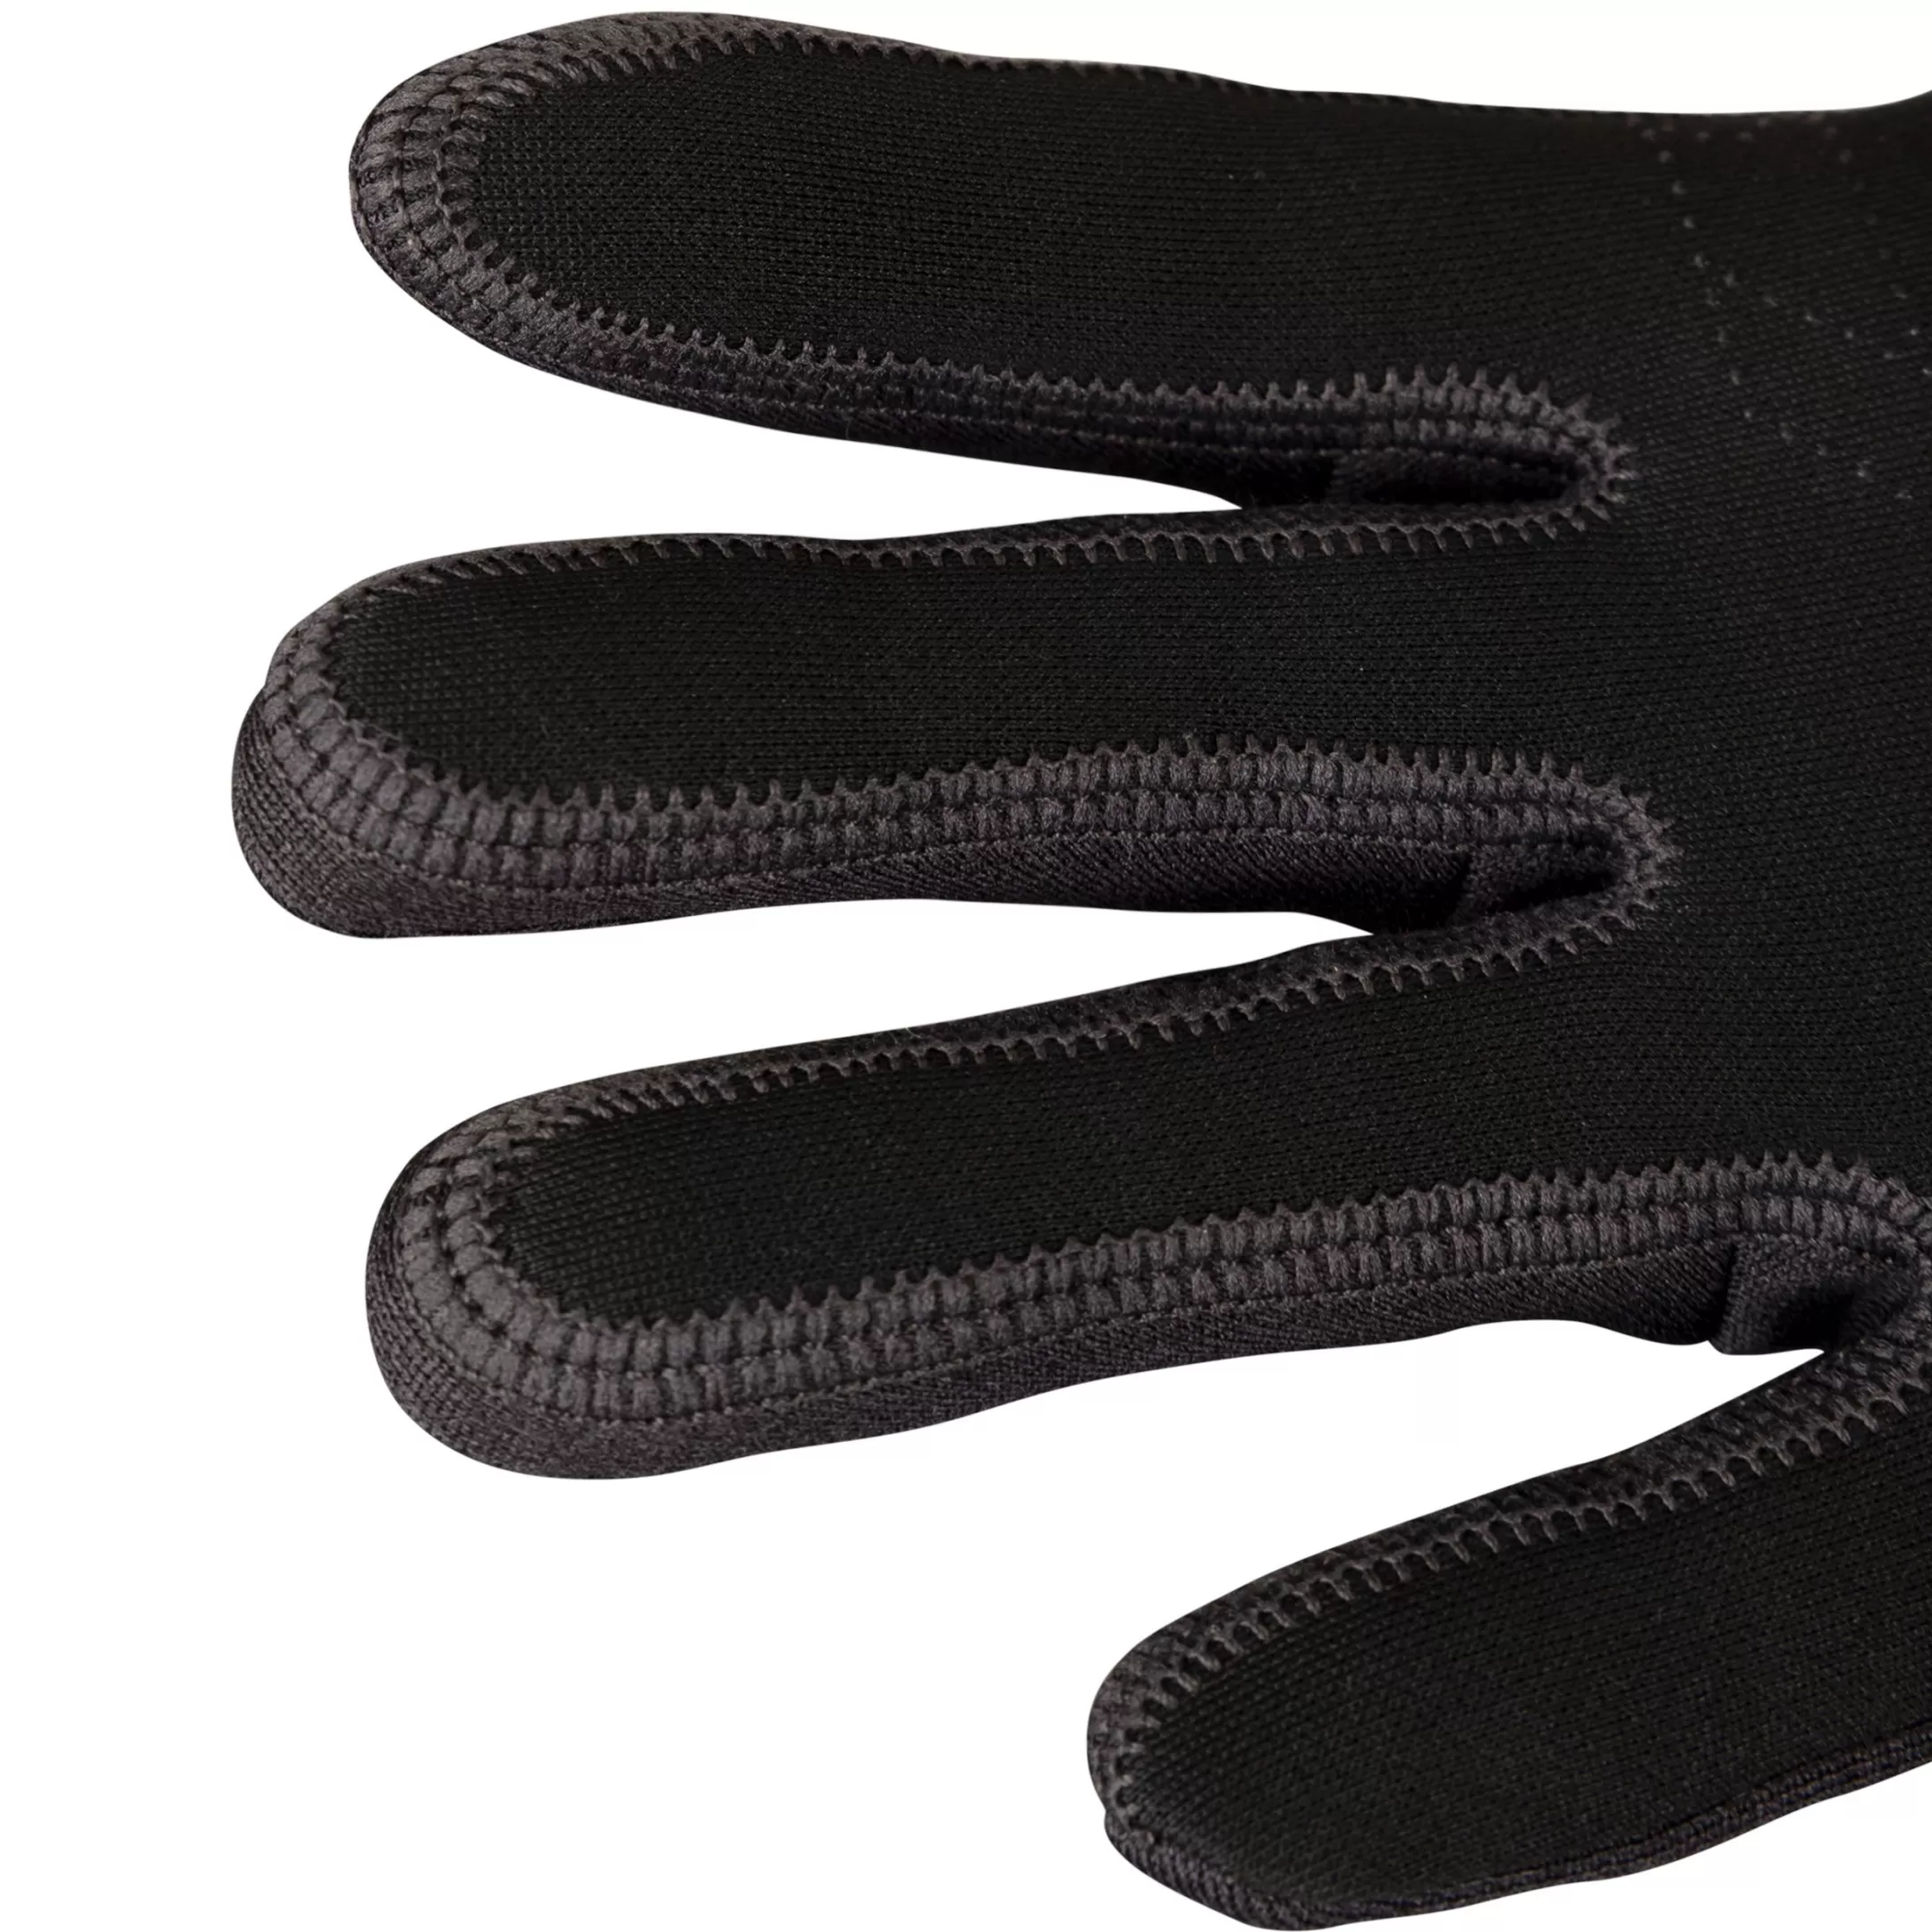 Kids' Unisex Gloves Atherton | Trespass Outlet